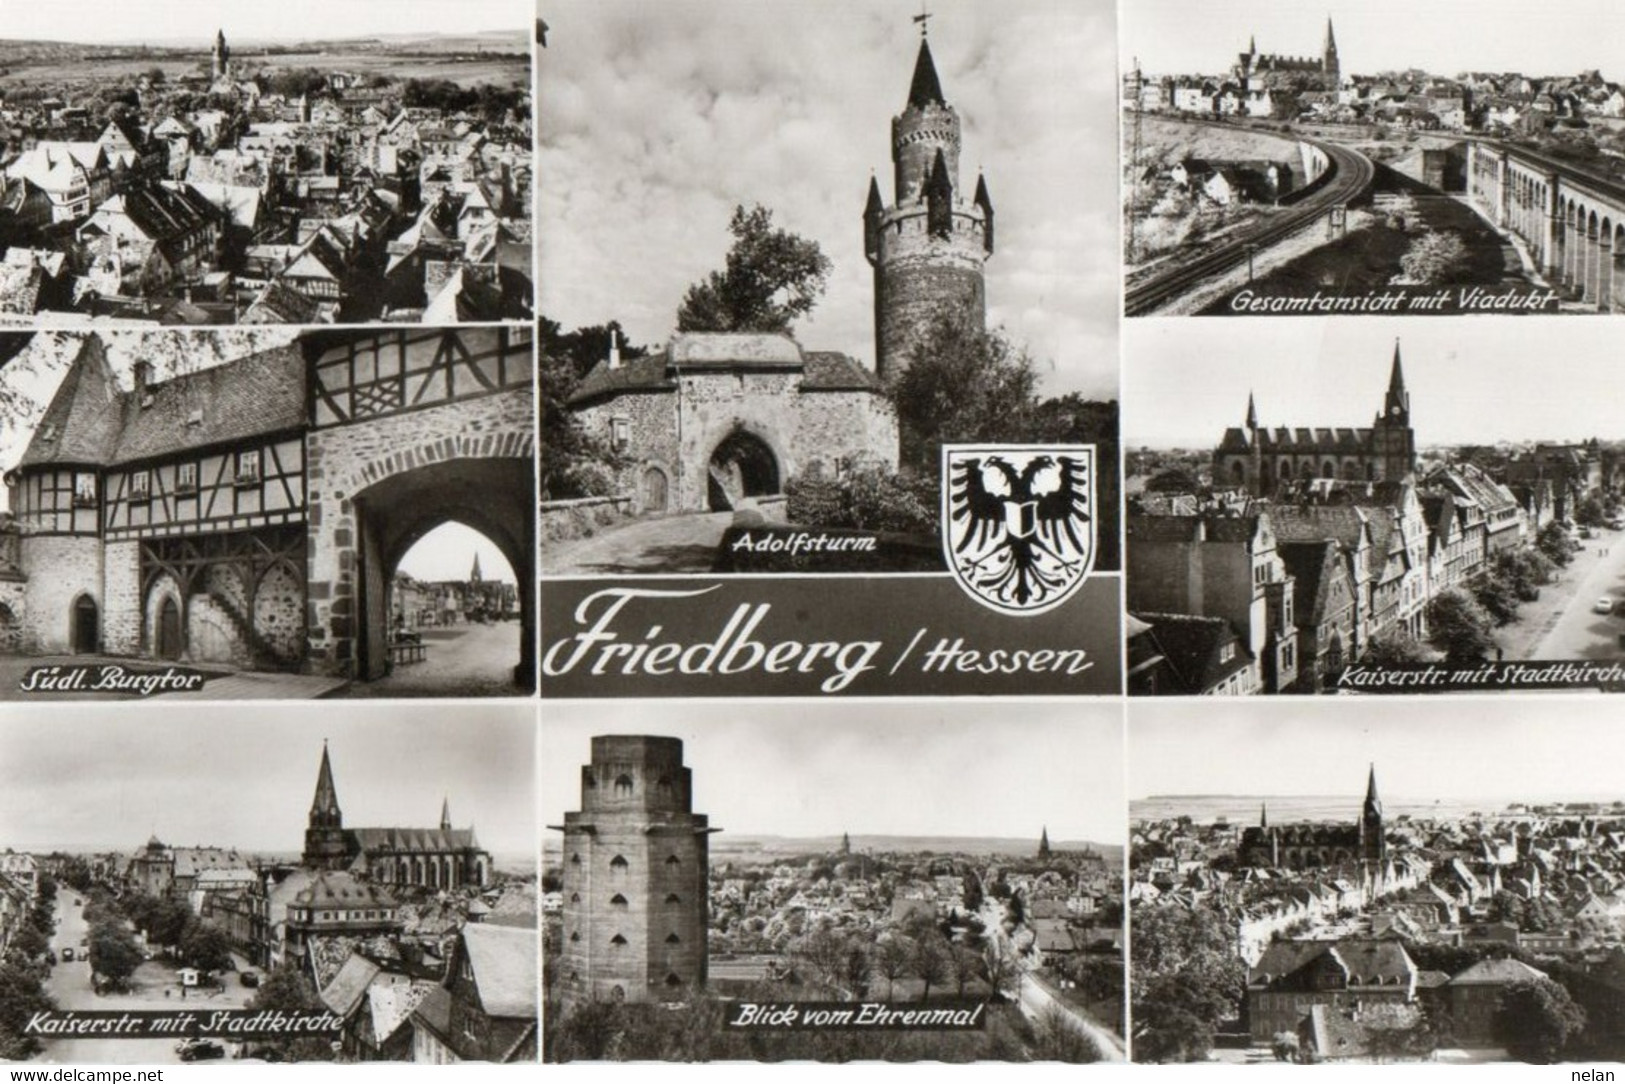 FRIEDBERG HASSEN - Friedberg